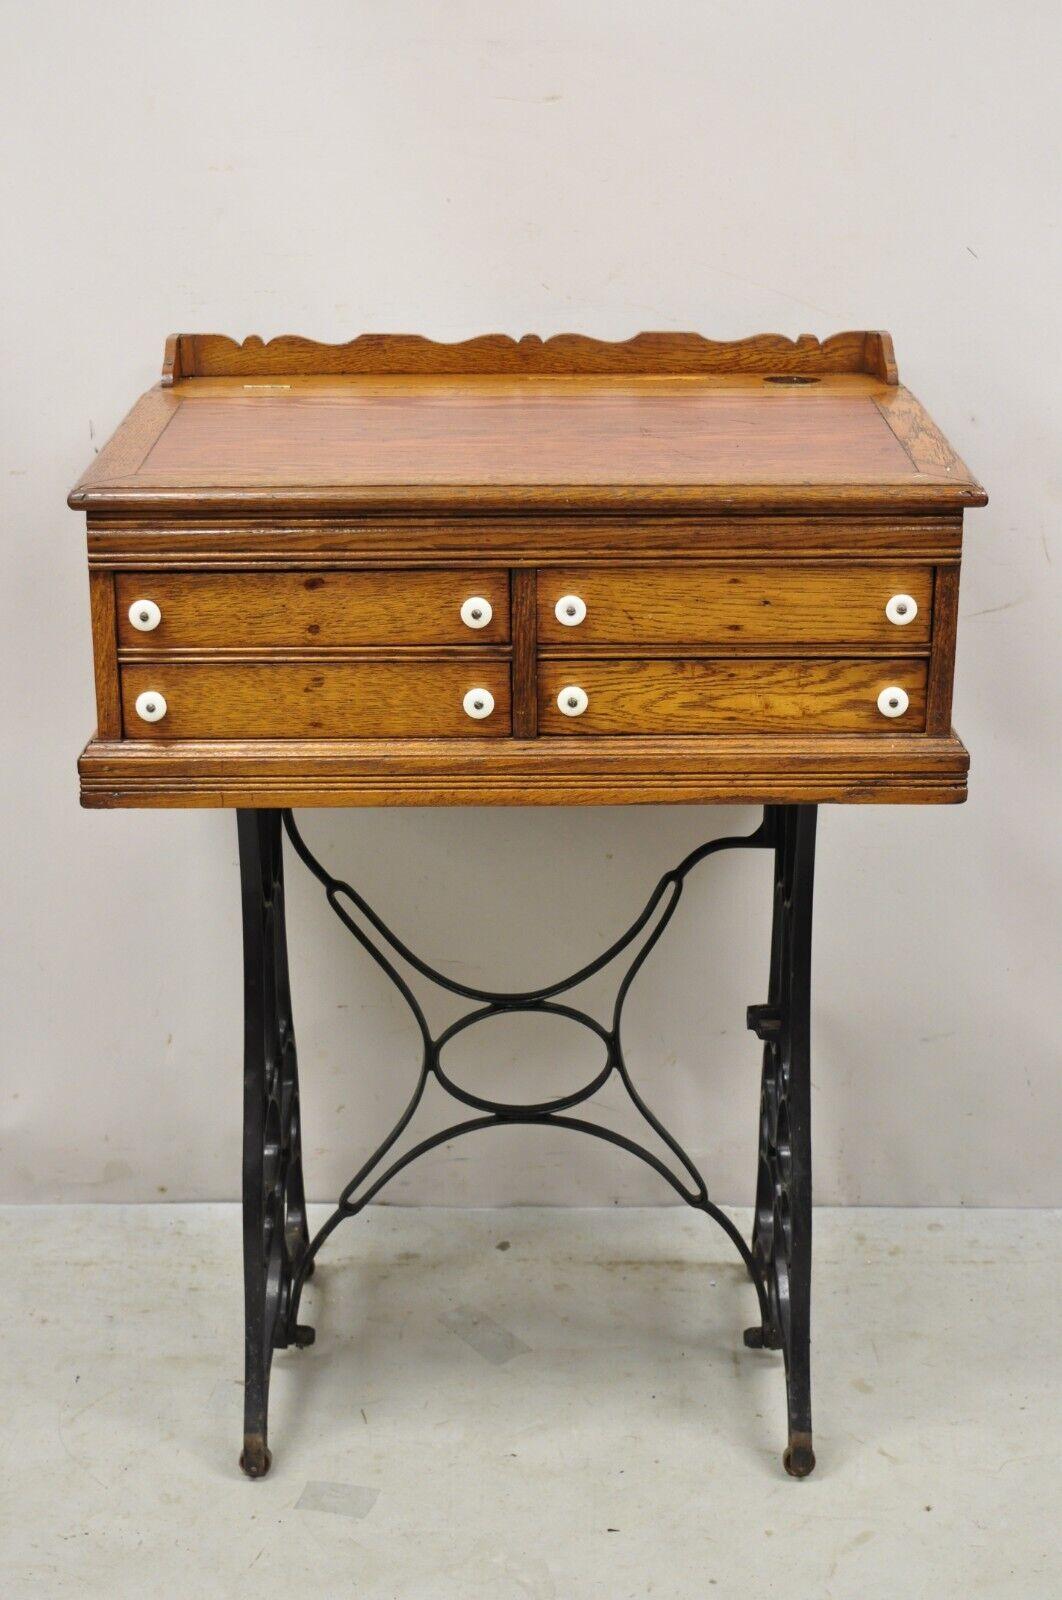 Antique J&P Coats Oak Wood 4 Drawer Sewing Spool Cabinet Desk w/ Cast Iron Base. Item features custom vintage conversion, upper is an original J&P Coats 